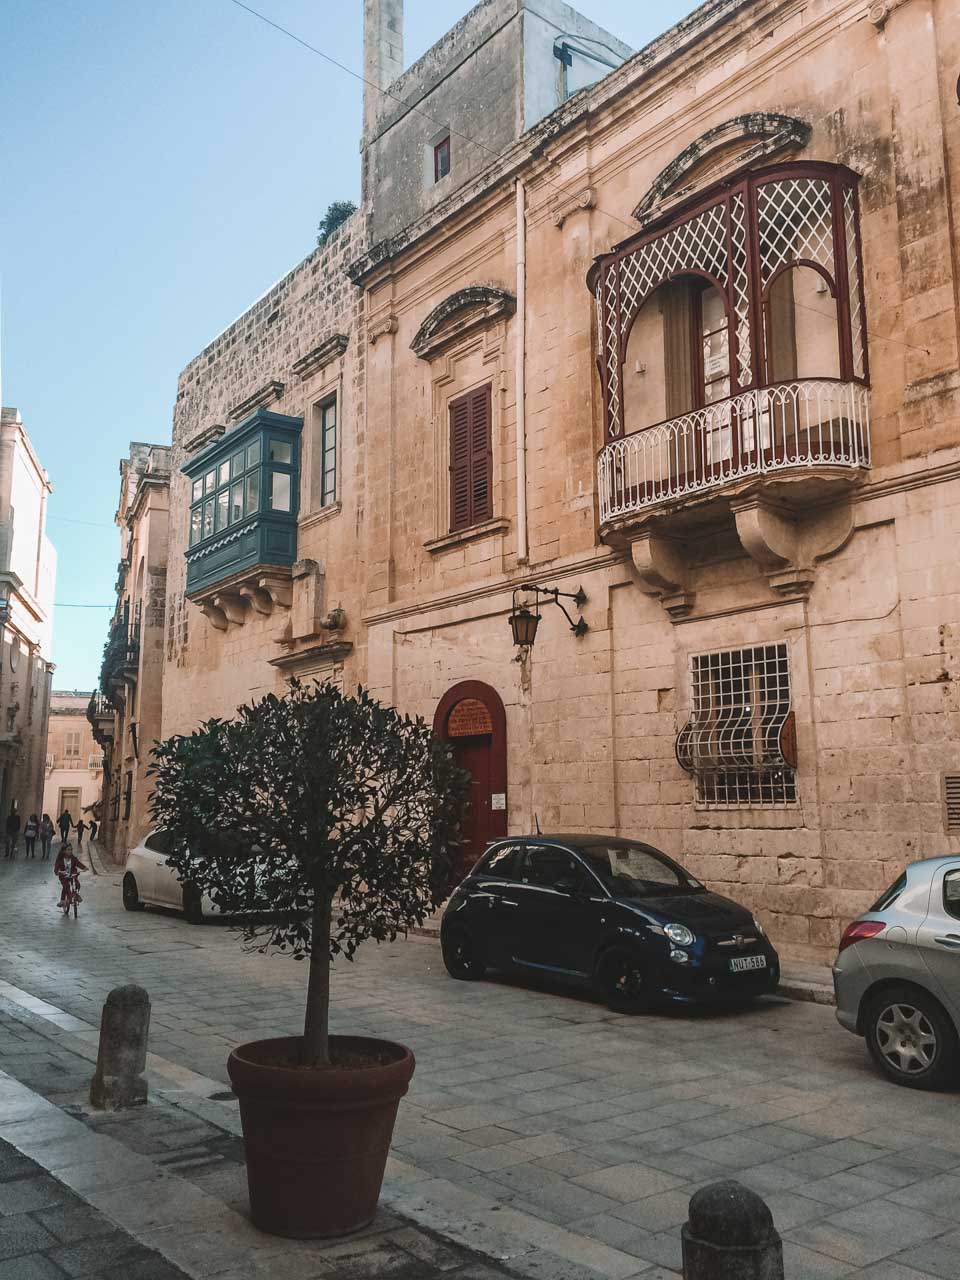 Traditional Maltese houses in Mdina, Malta